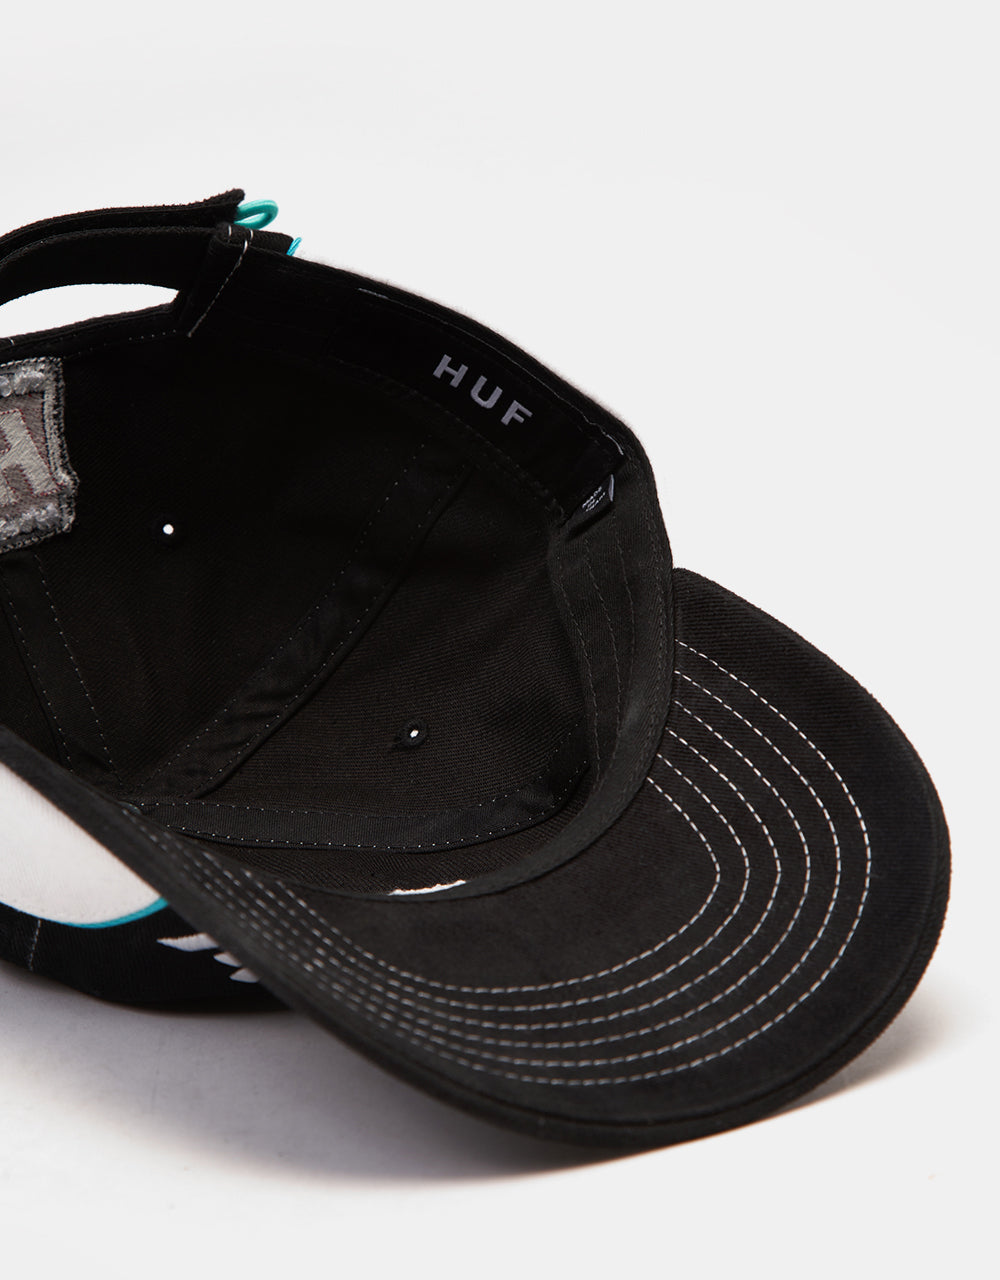 HUF x Greddy Racing Team Hat - Black